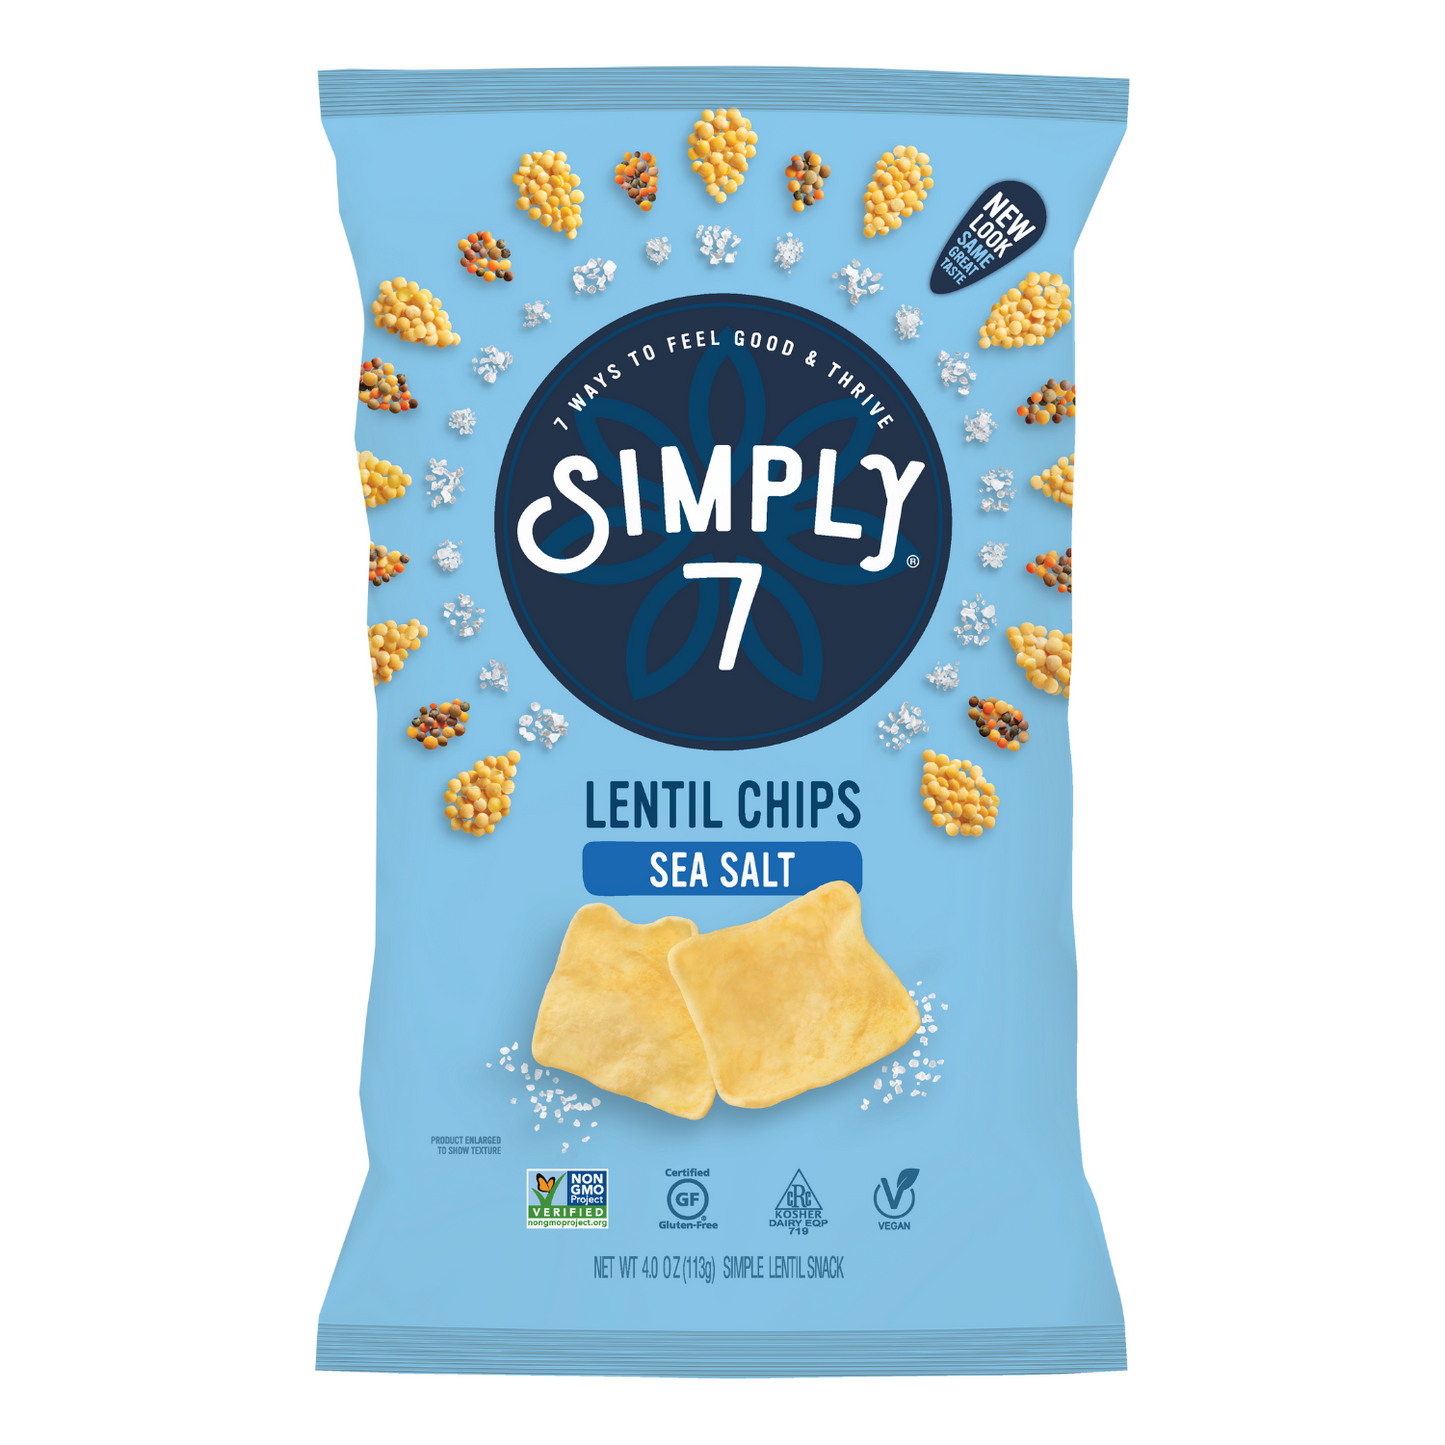 Simply 7 Lentil Chips - Sea Salt, 113 g.